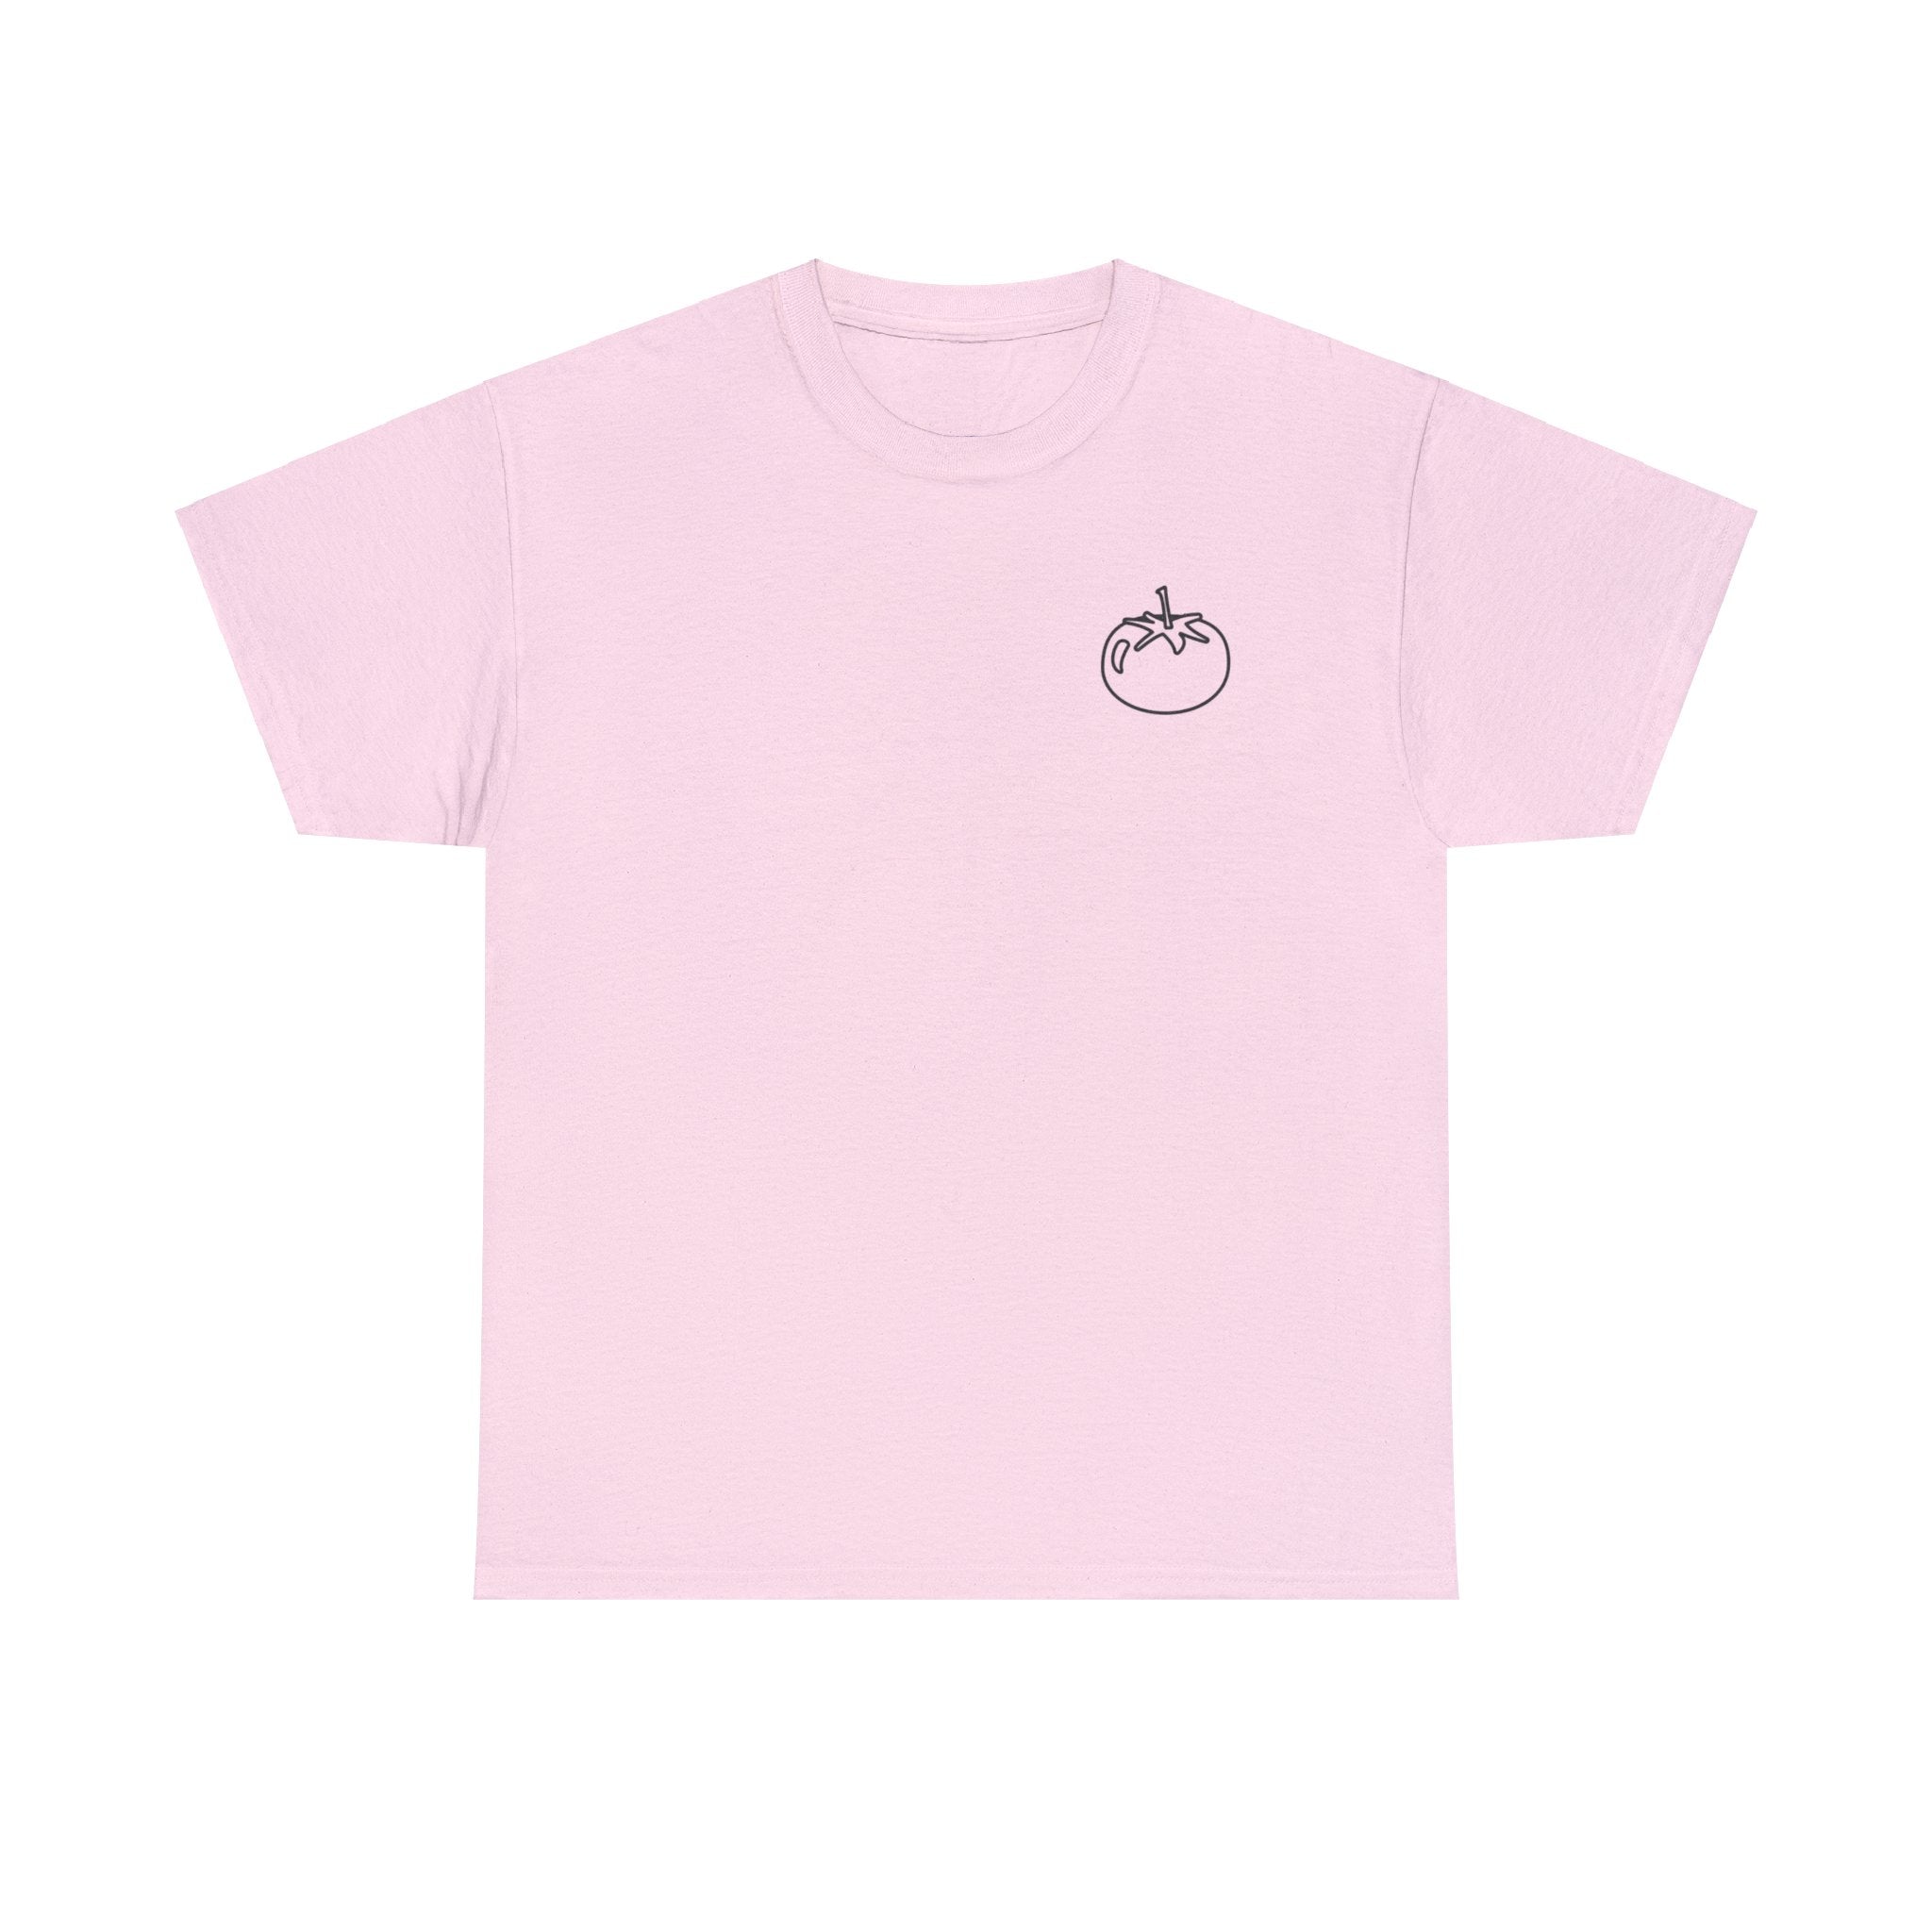 AUS - Tomato T-shirt